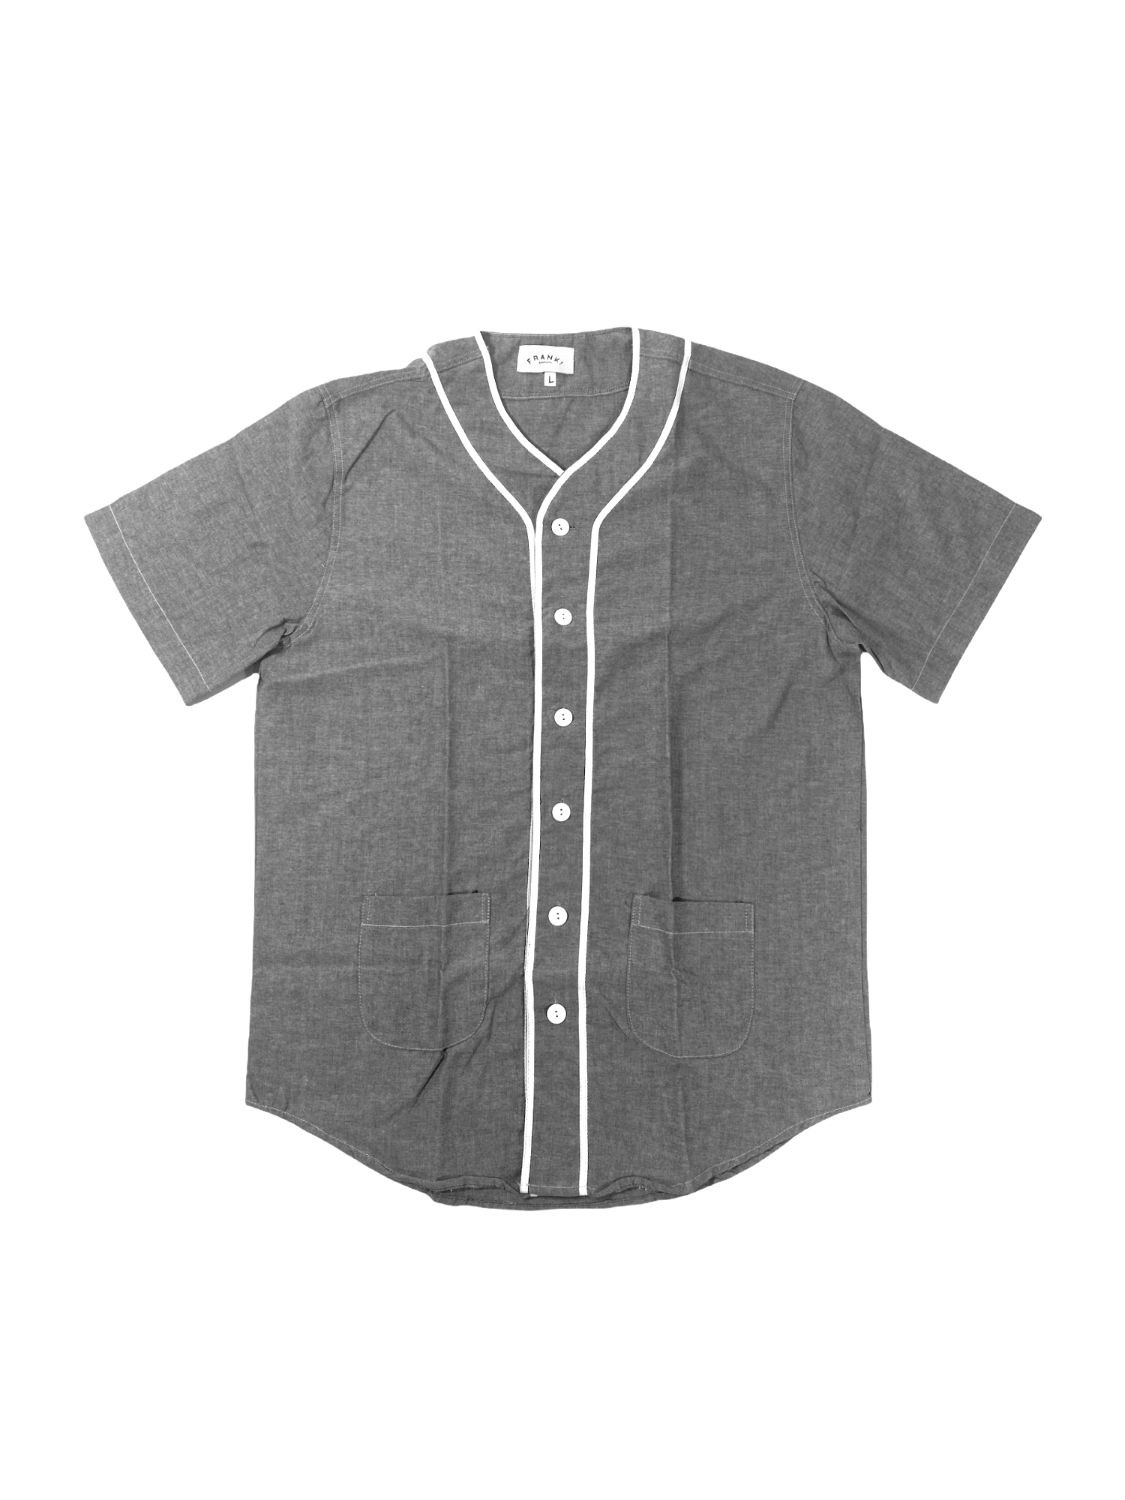 Baseball Shirt (Light Grey)